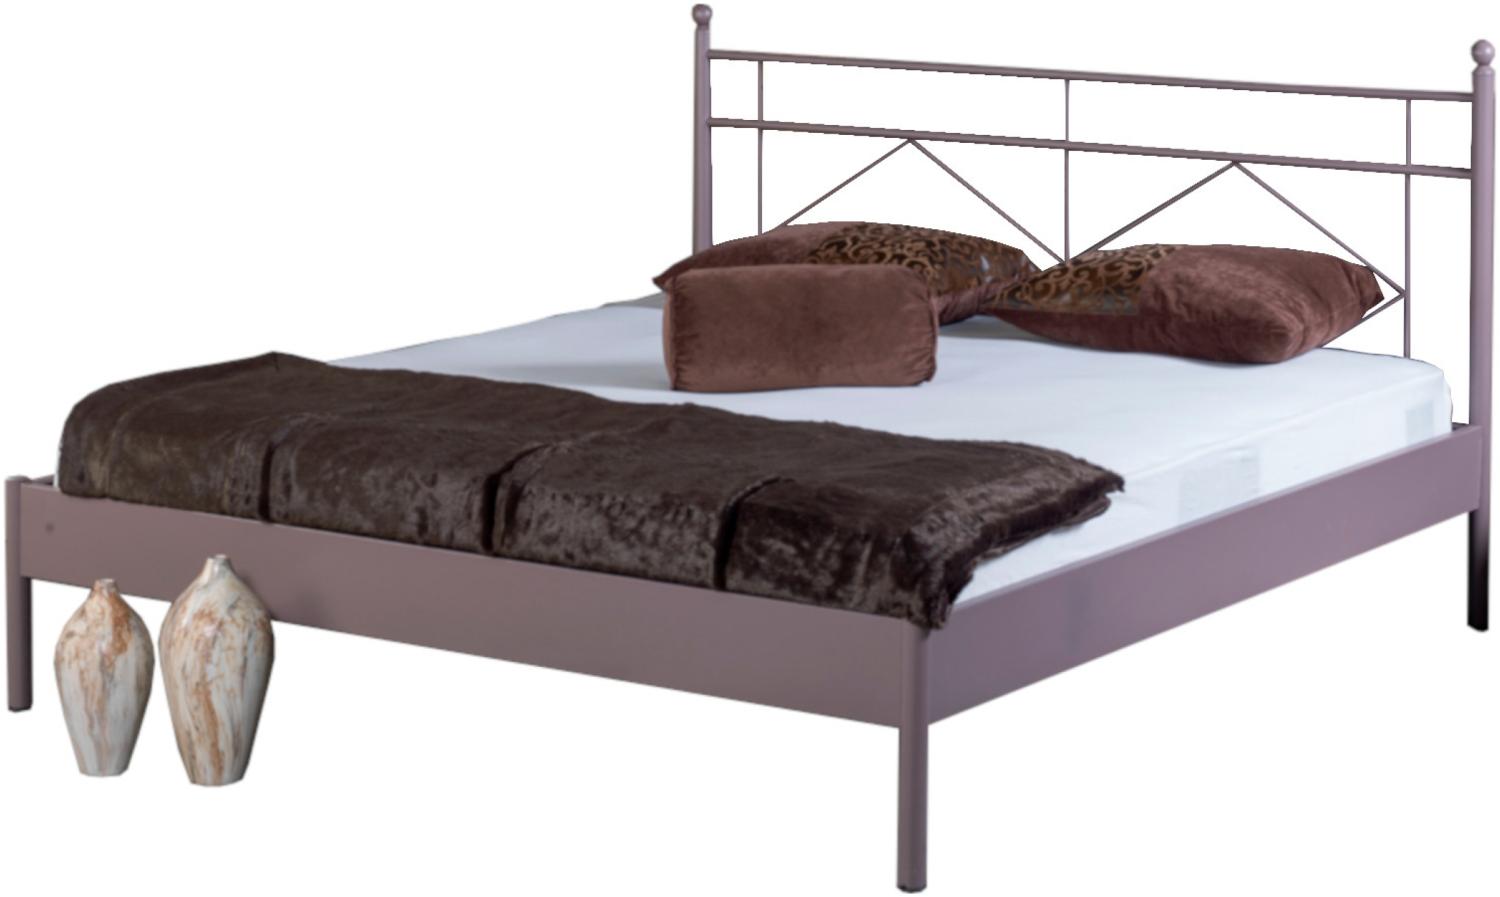 Bed Box Metall Bettrahmen Bettgestell Celina 1023 Größe 160x210 cm Bild 1